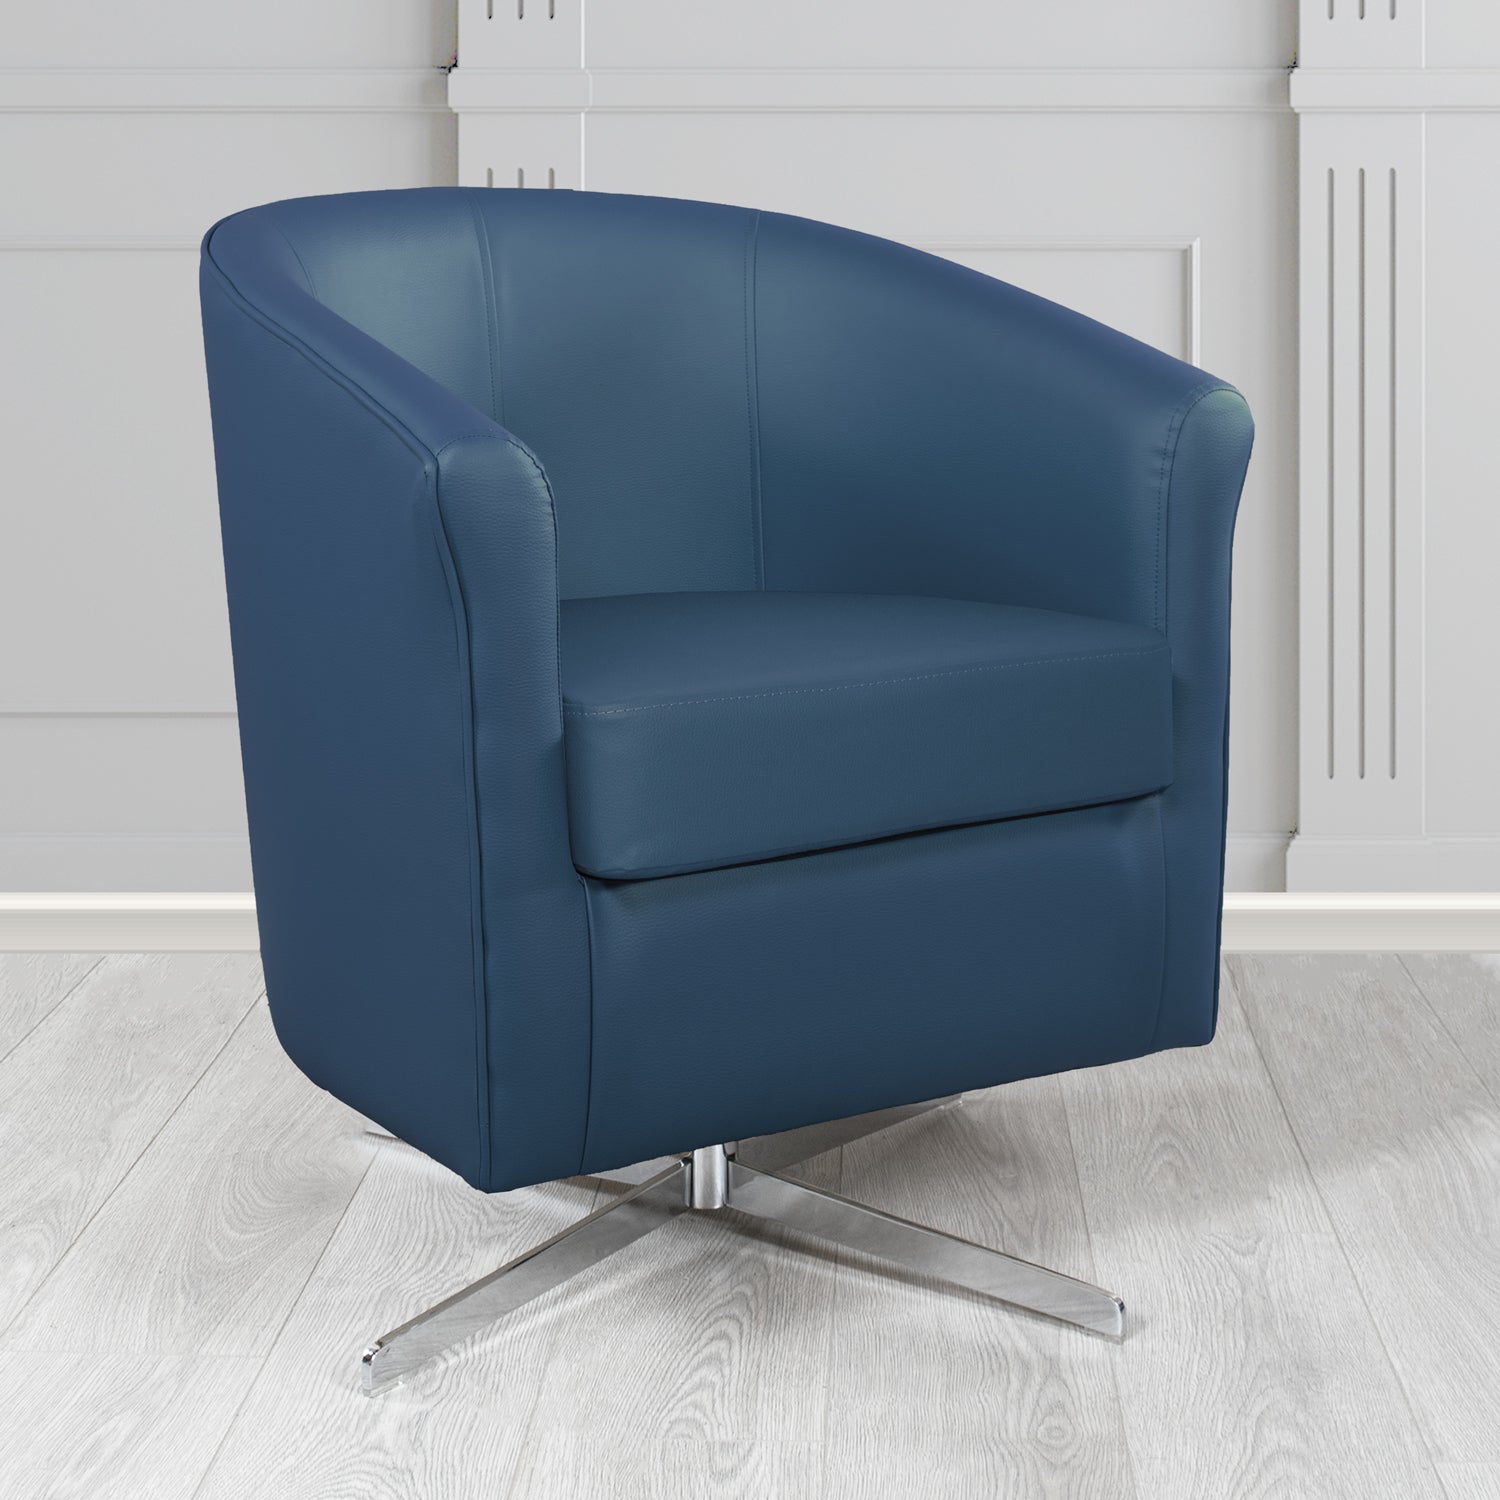 Cannes Swivel Tub Chair in Just Colour Sapphire Blue Crib 5 Faux Leather - The Tub Chair Shop